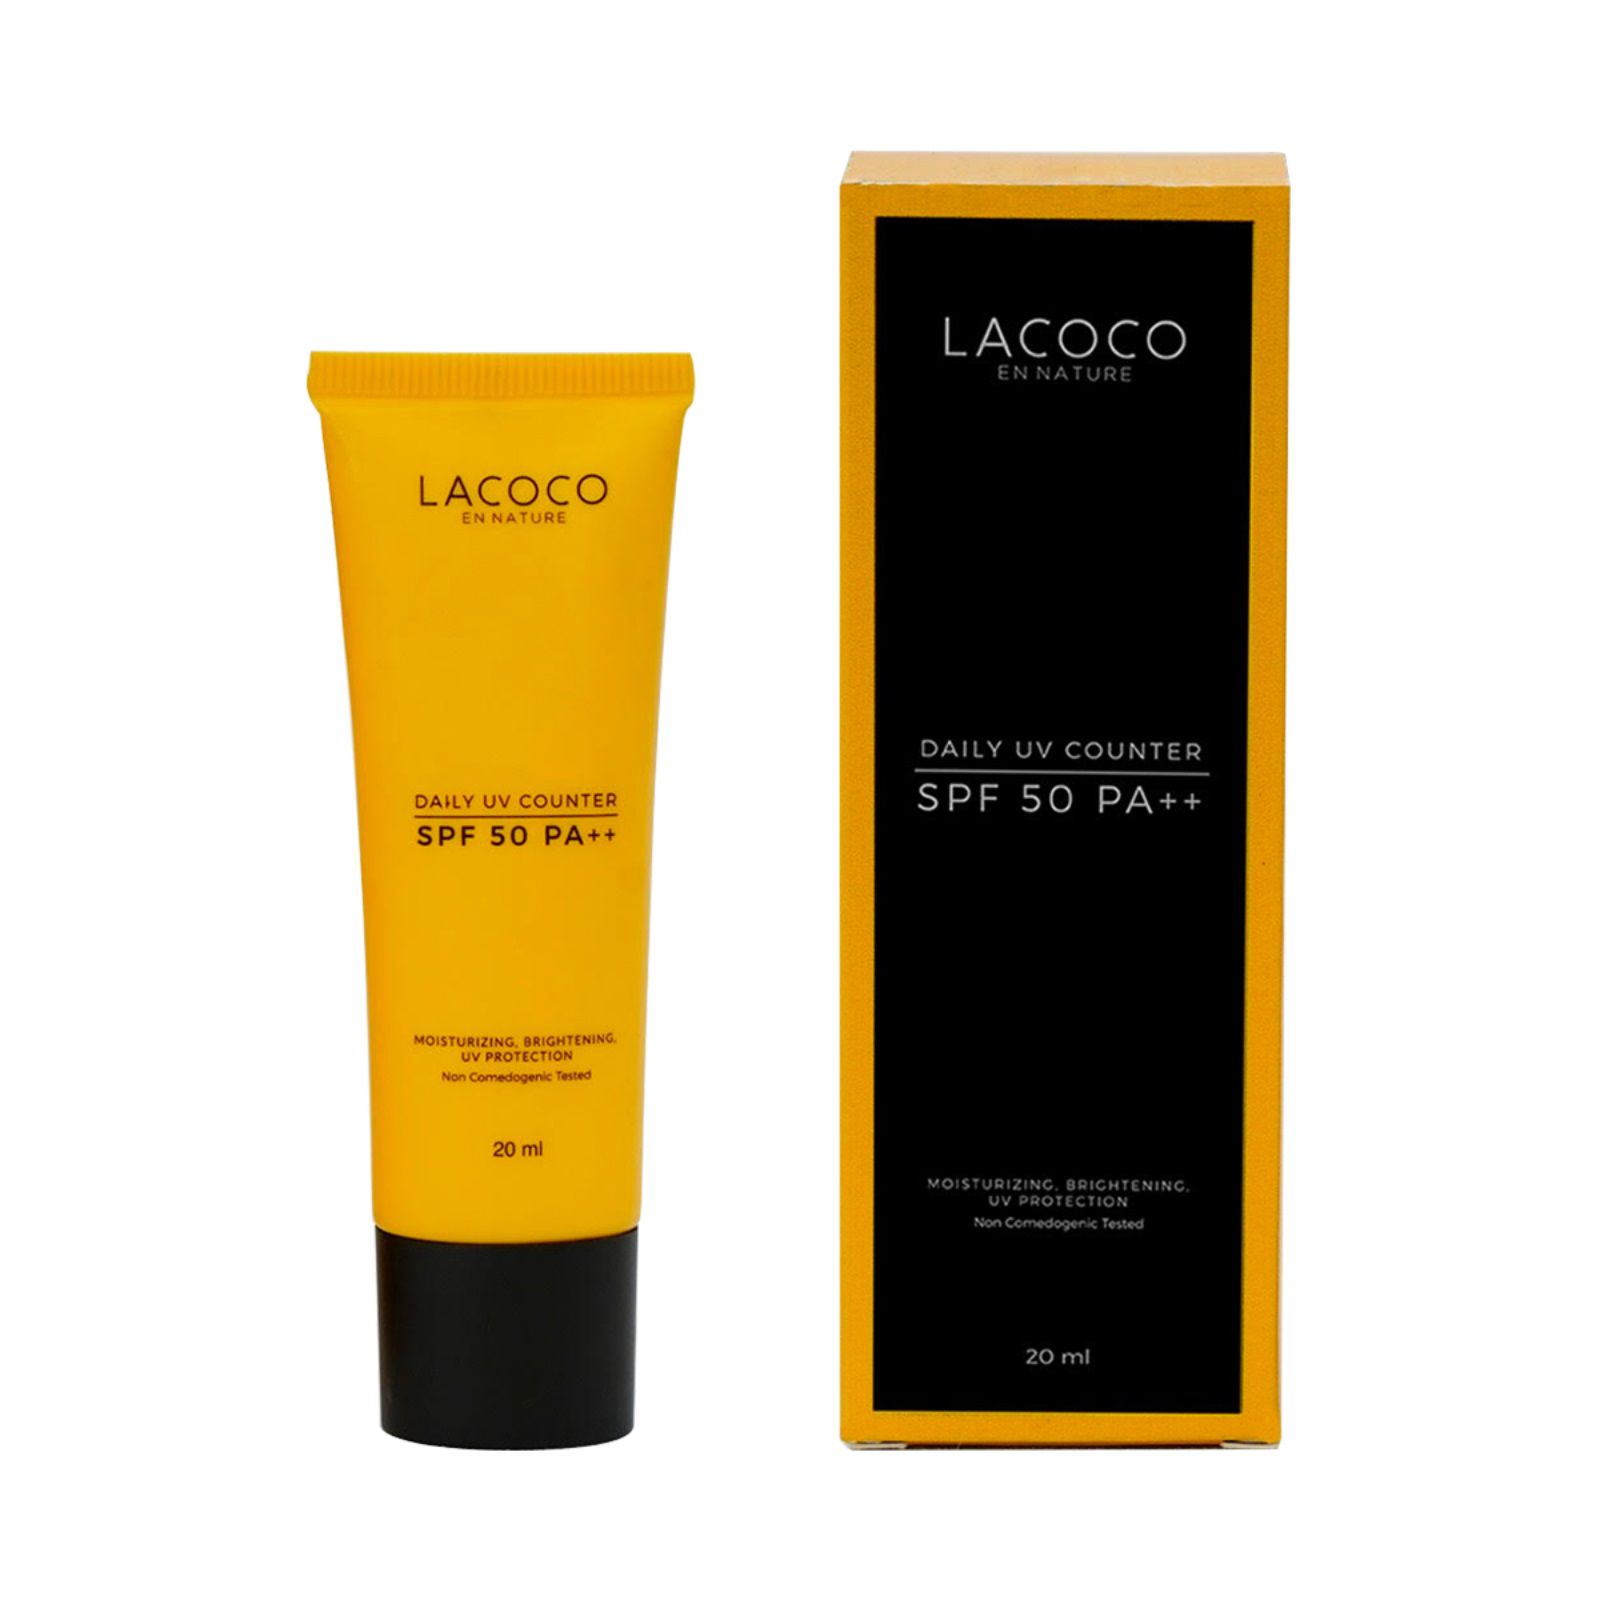 Rekomendasi Sunscreen Anti Aging - Lacoco Daily UV Counter SPF 50 PA